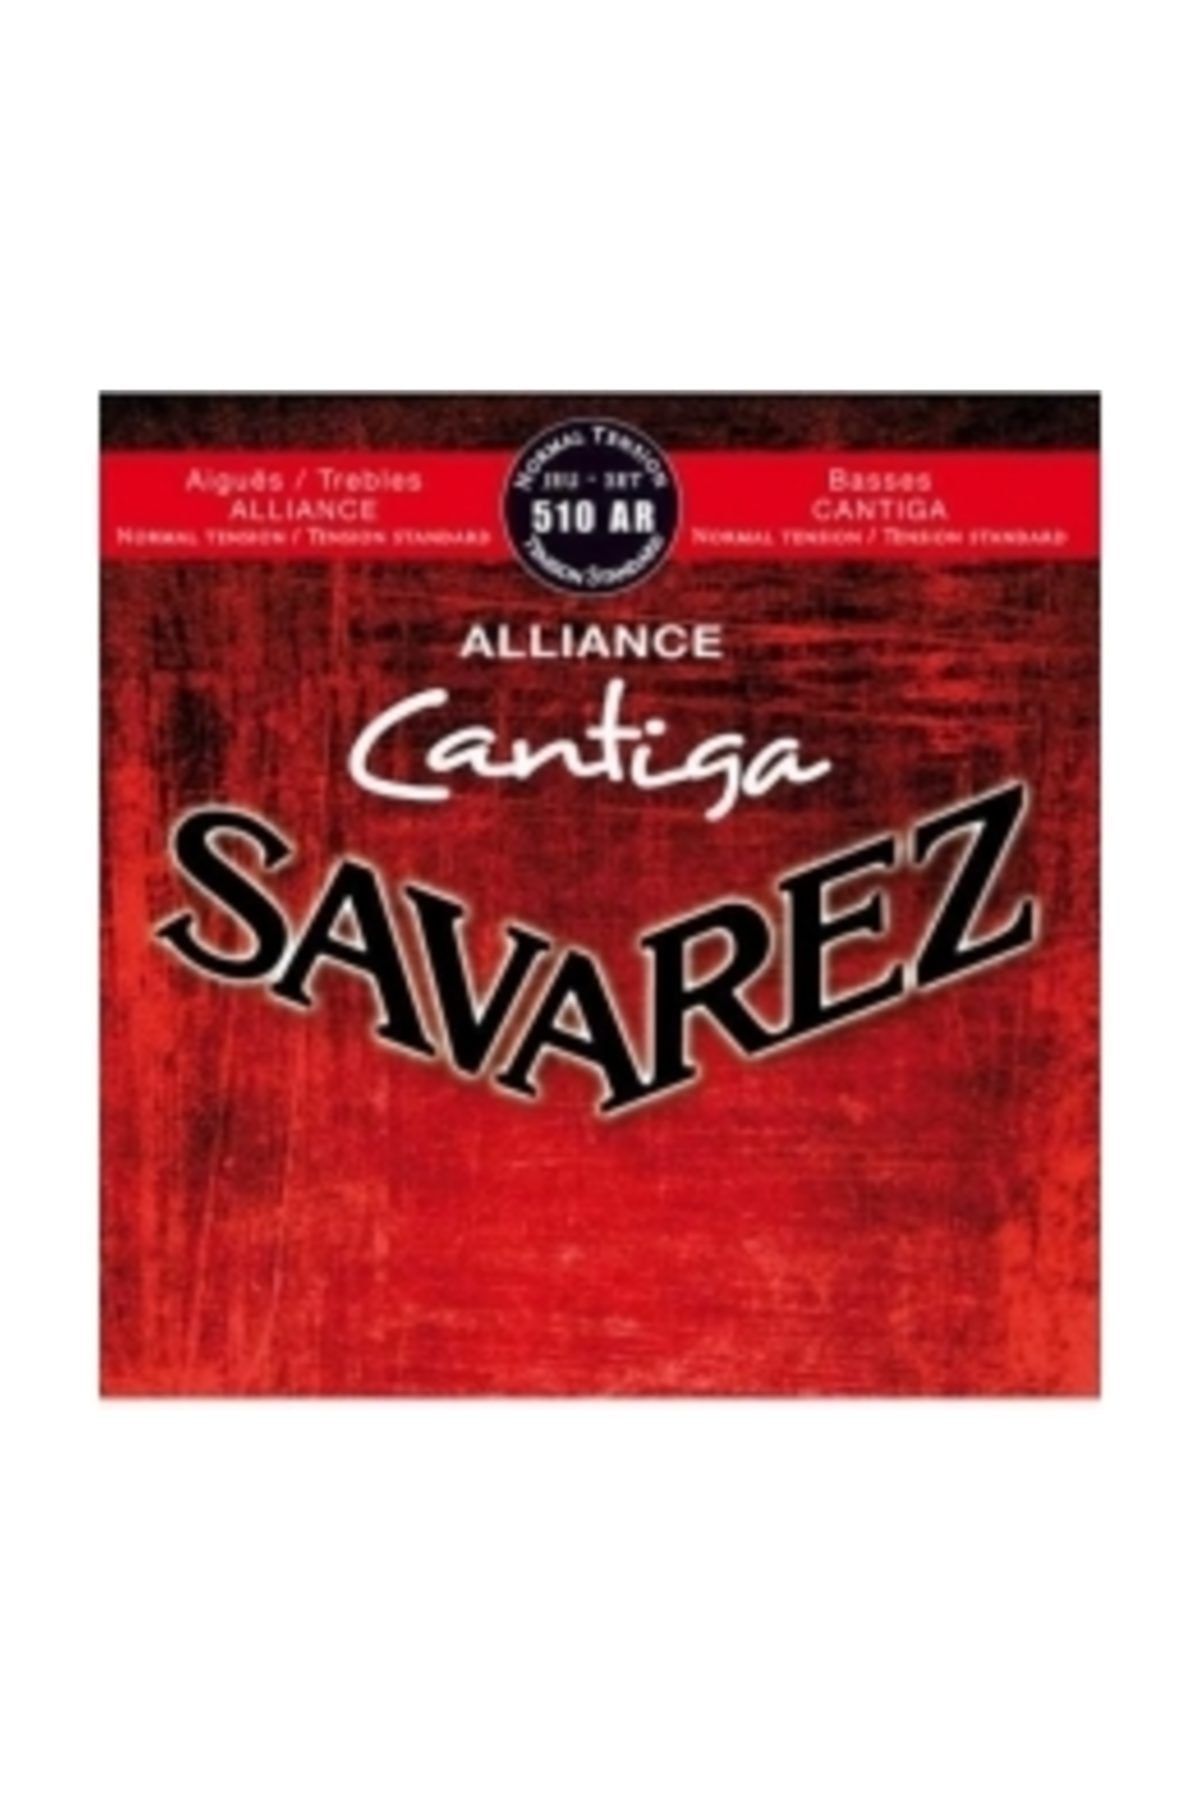 Savarez струны для классической гитары. Savarez 510ar. Струны Savarez 570cs. Savarez 540arj Alliance HT Classic Red/ Blue Medium-High tension. Savarez f50l Focus комплект струн для электрогитары, никелированные, 10-46.